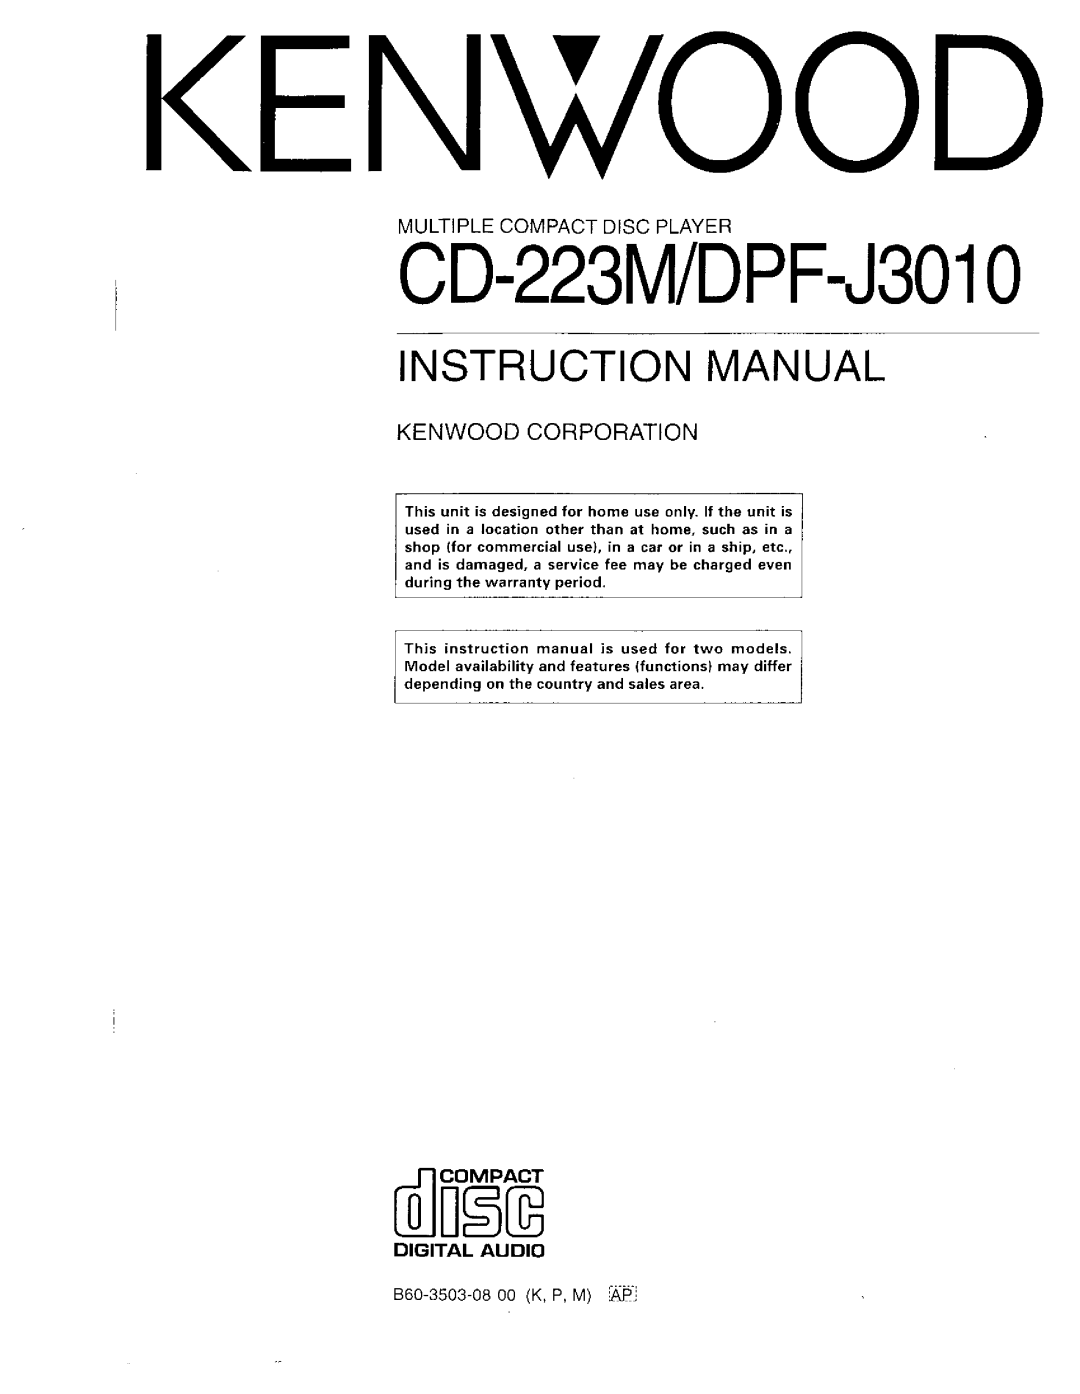 Kenwood CD-223M, DPF-J3010, CD Player, 76 manual 